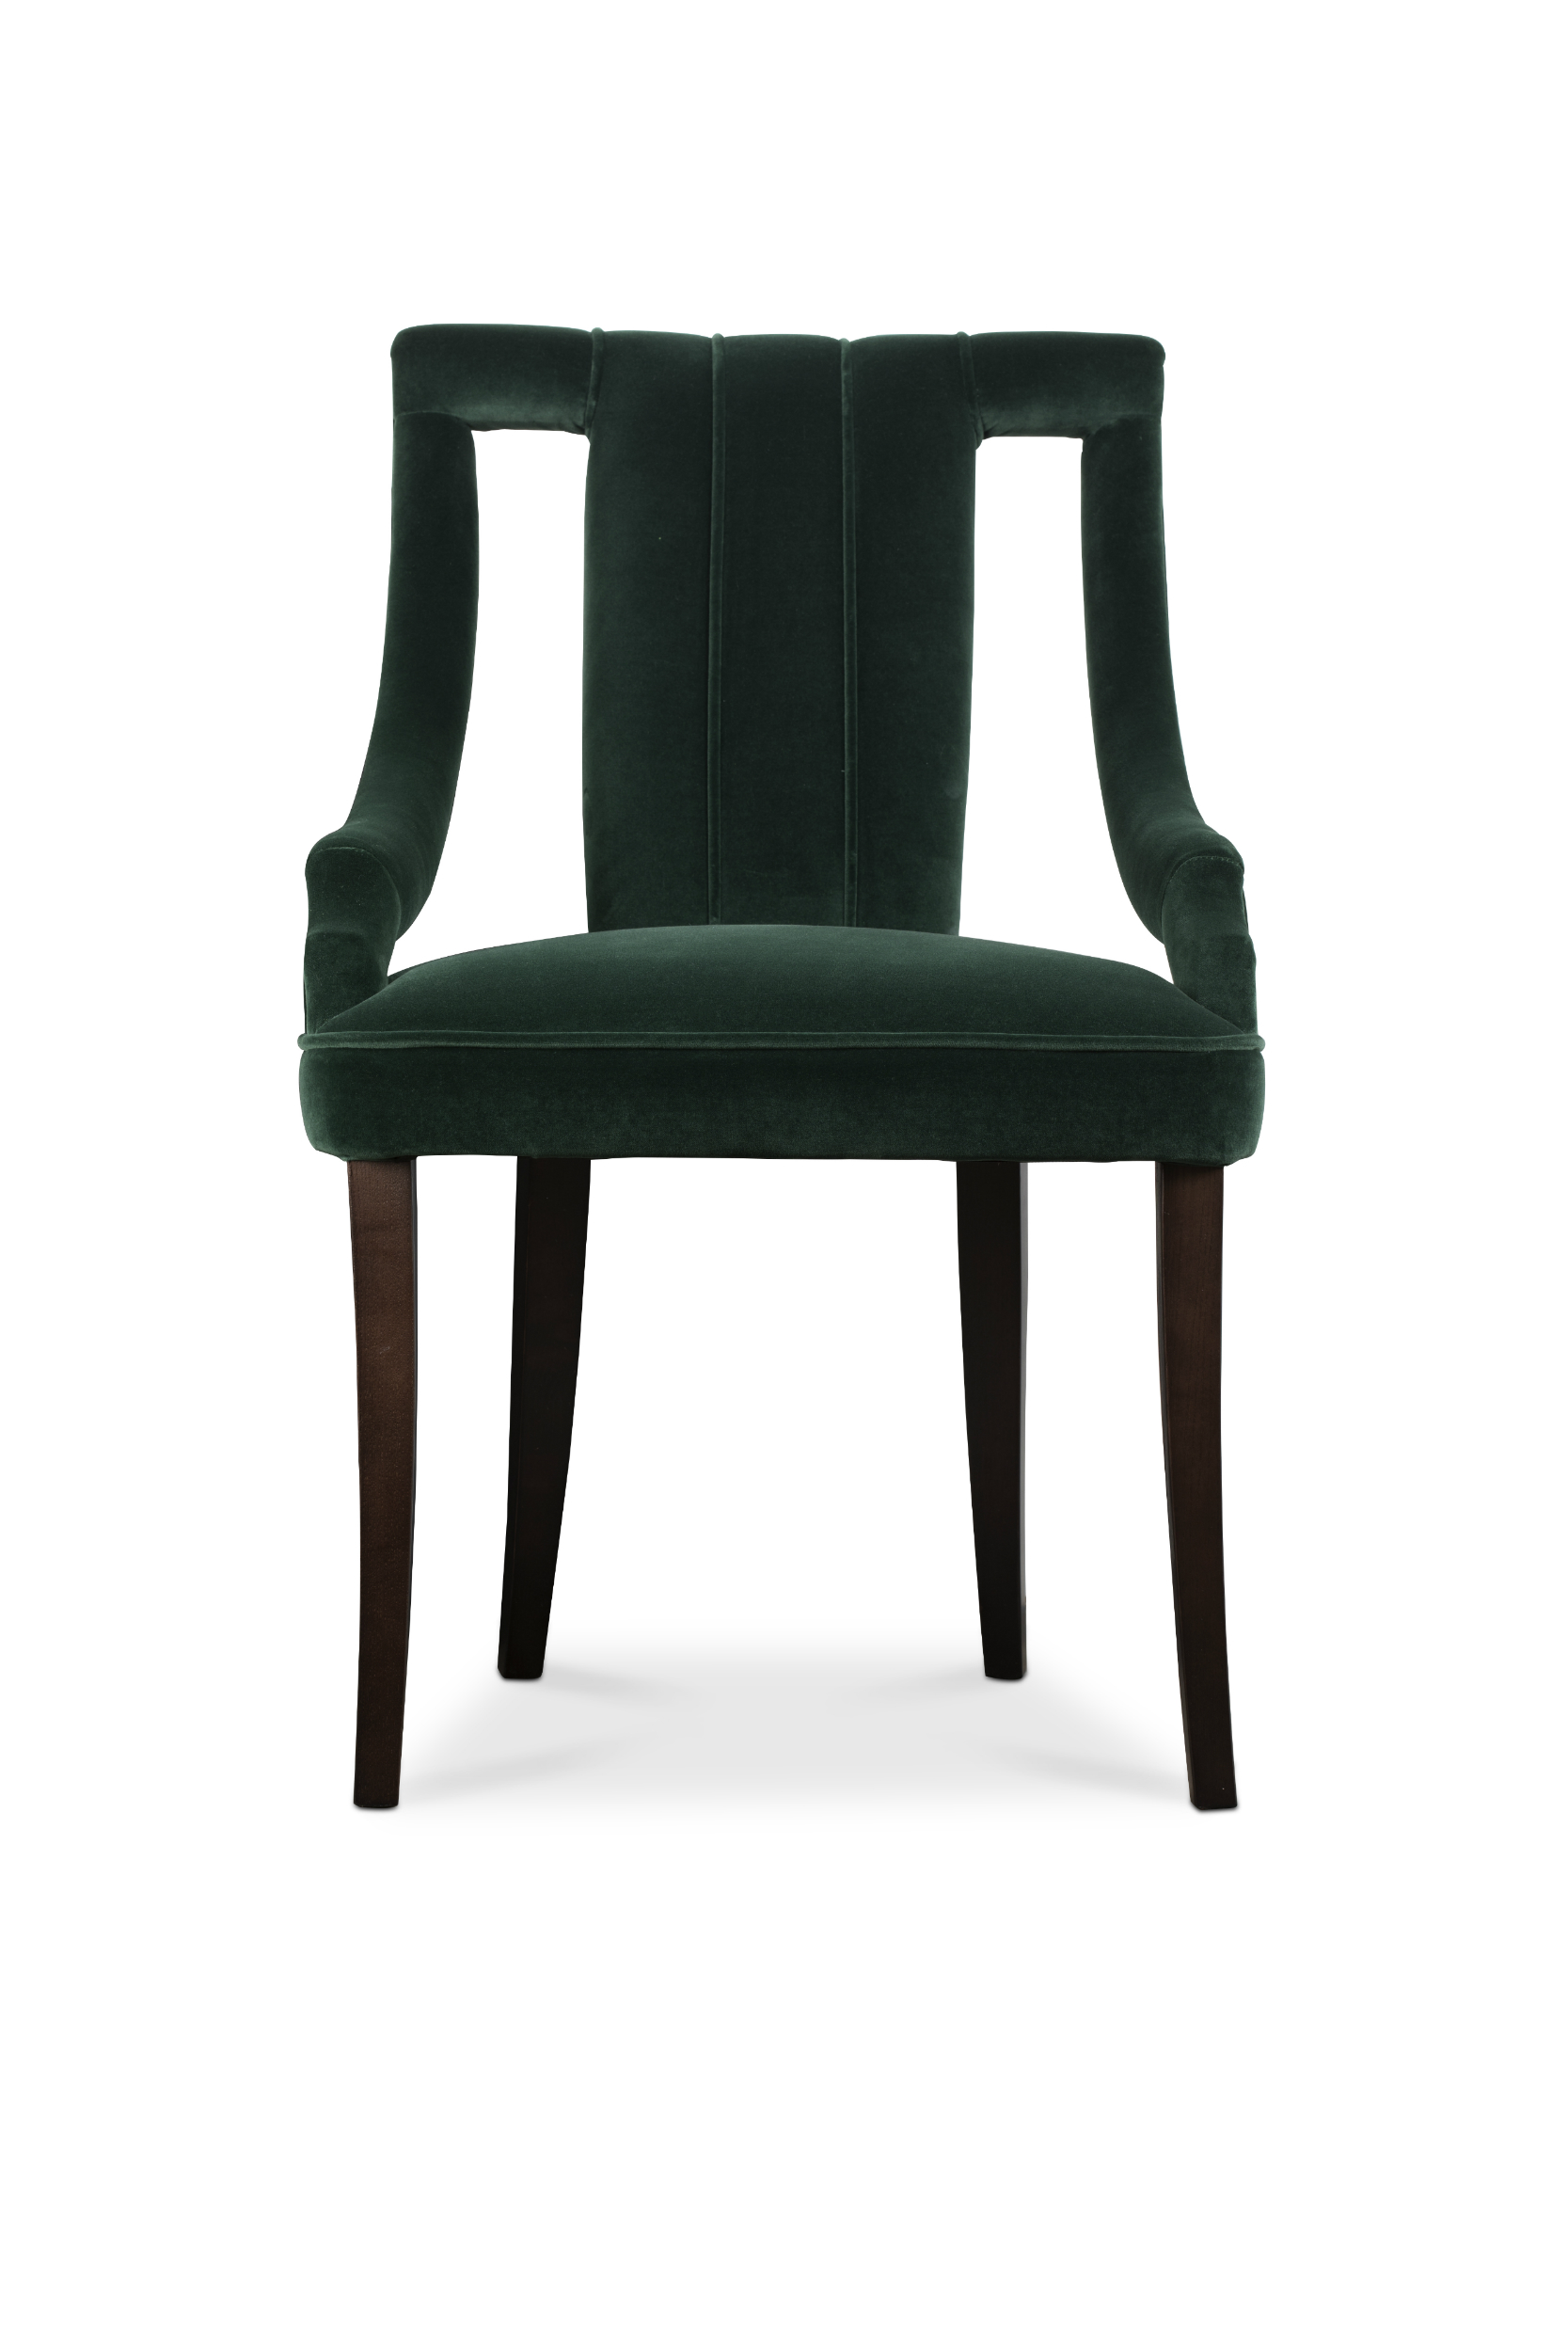 STOLA Dining Chair; Dining Chair; Upholstery; Modern; Sophistication; Elegance; Classiness; Comfort; Fierceness; BRABBU; Design; Furniture